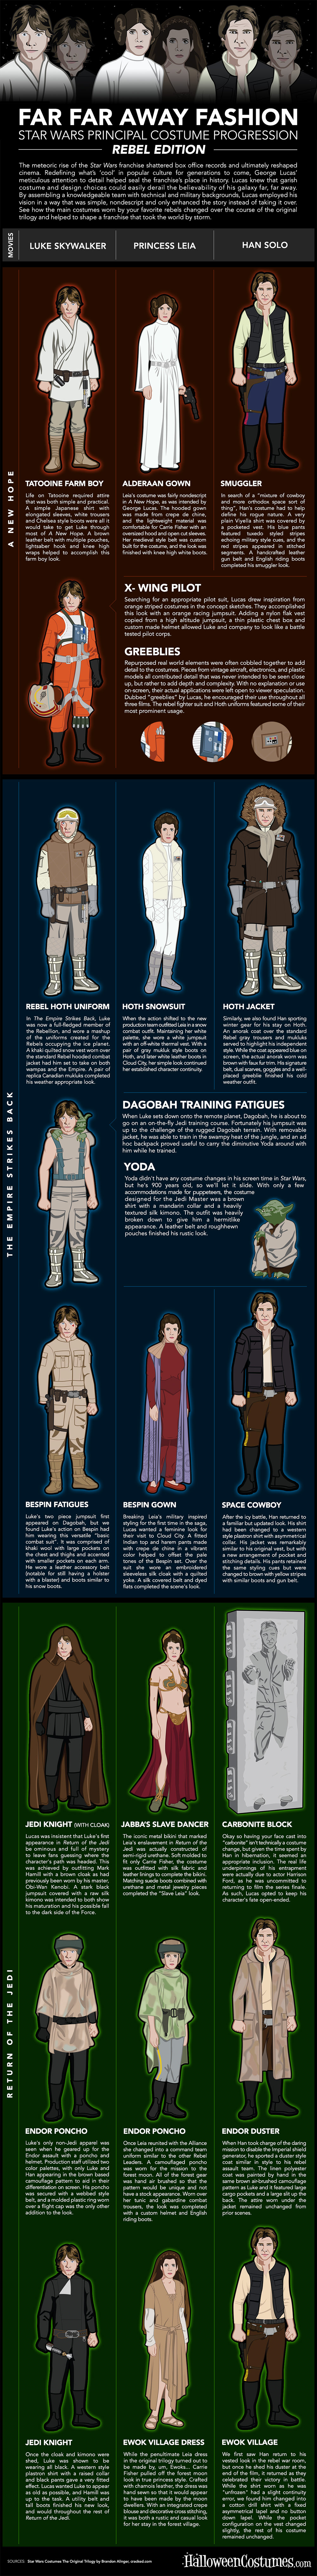 Star Wars Costume Evolution Infographic